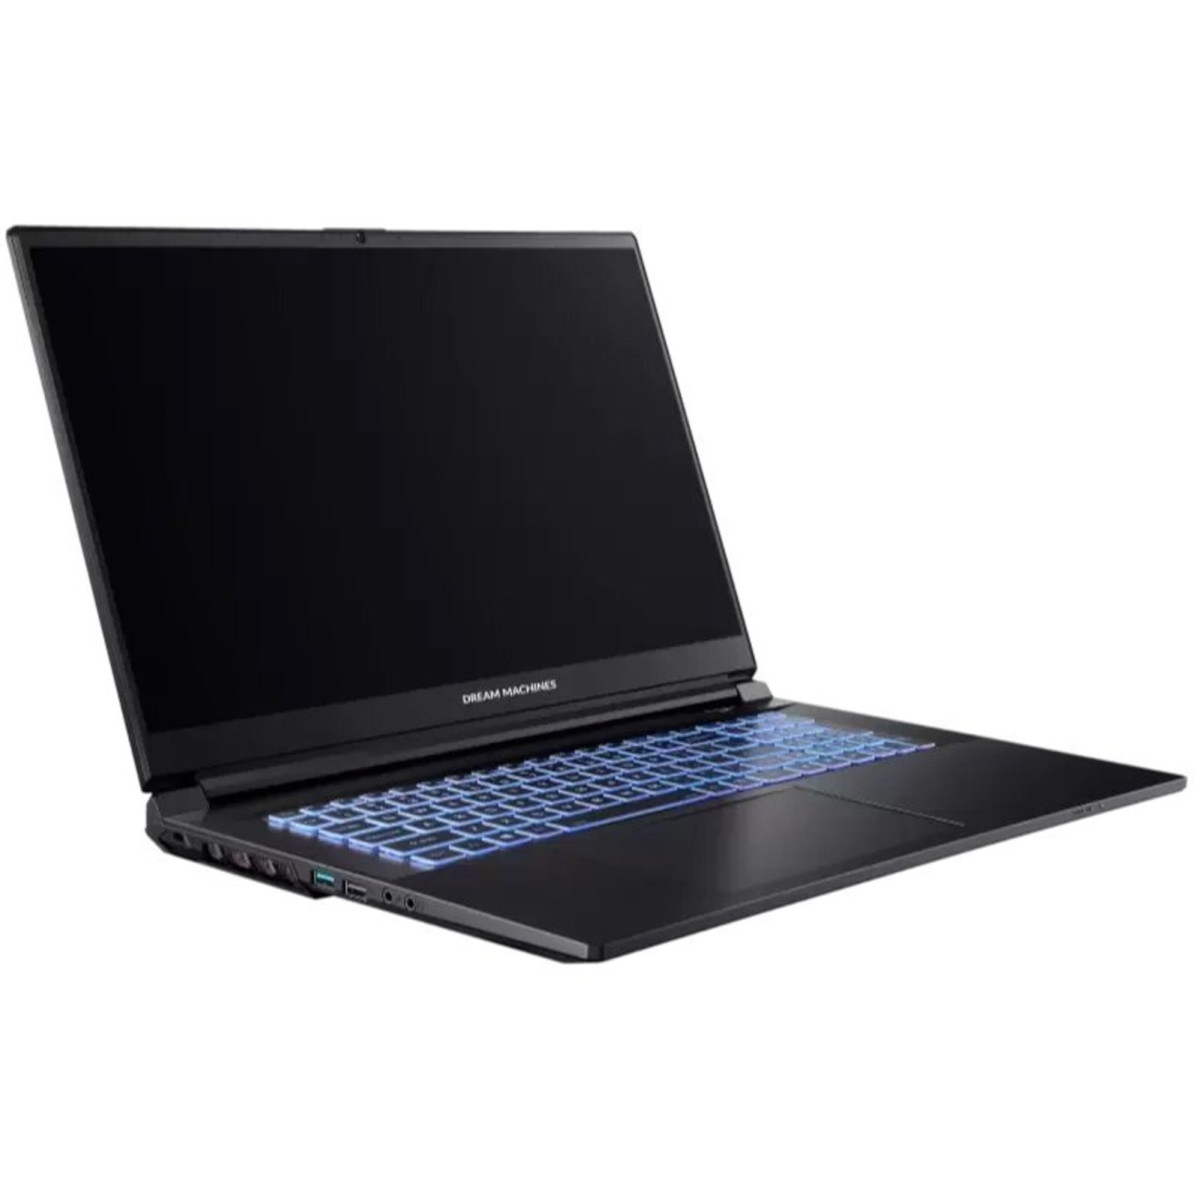 Ігровий ноутбук Dream Machines RG3050-17 Black (RG3050-17UA54)